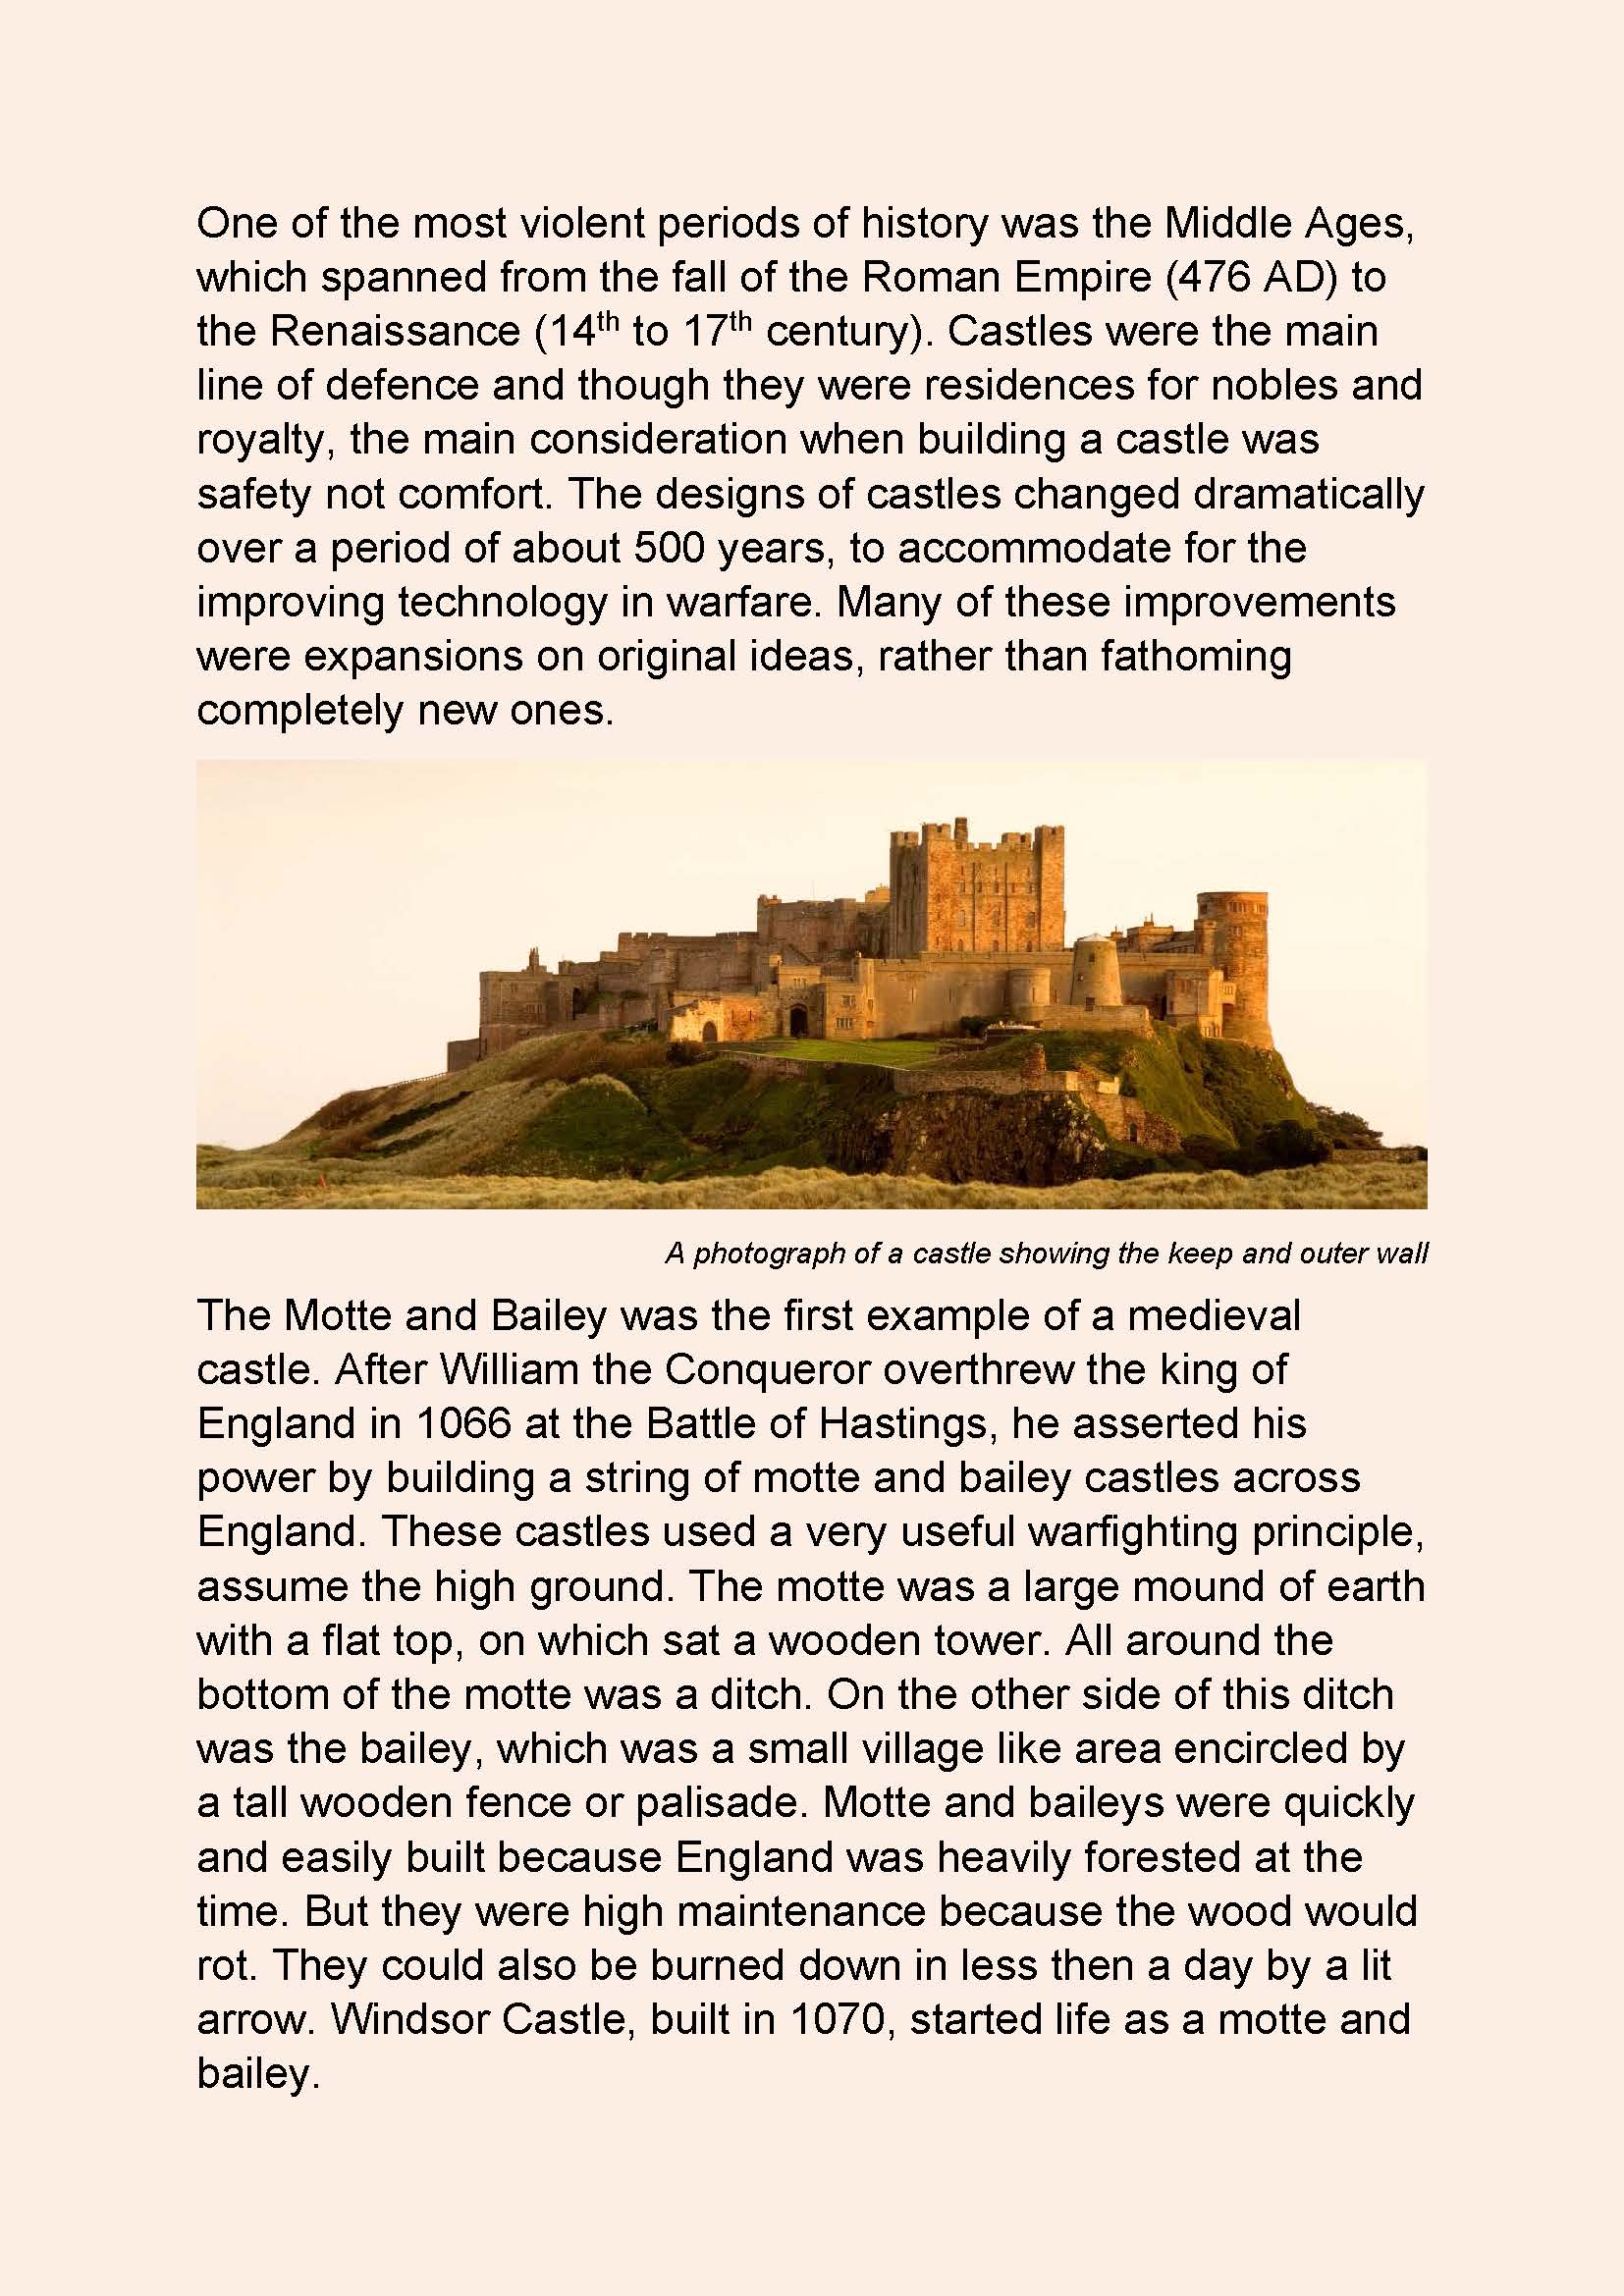 creative writing description of castle